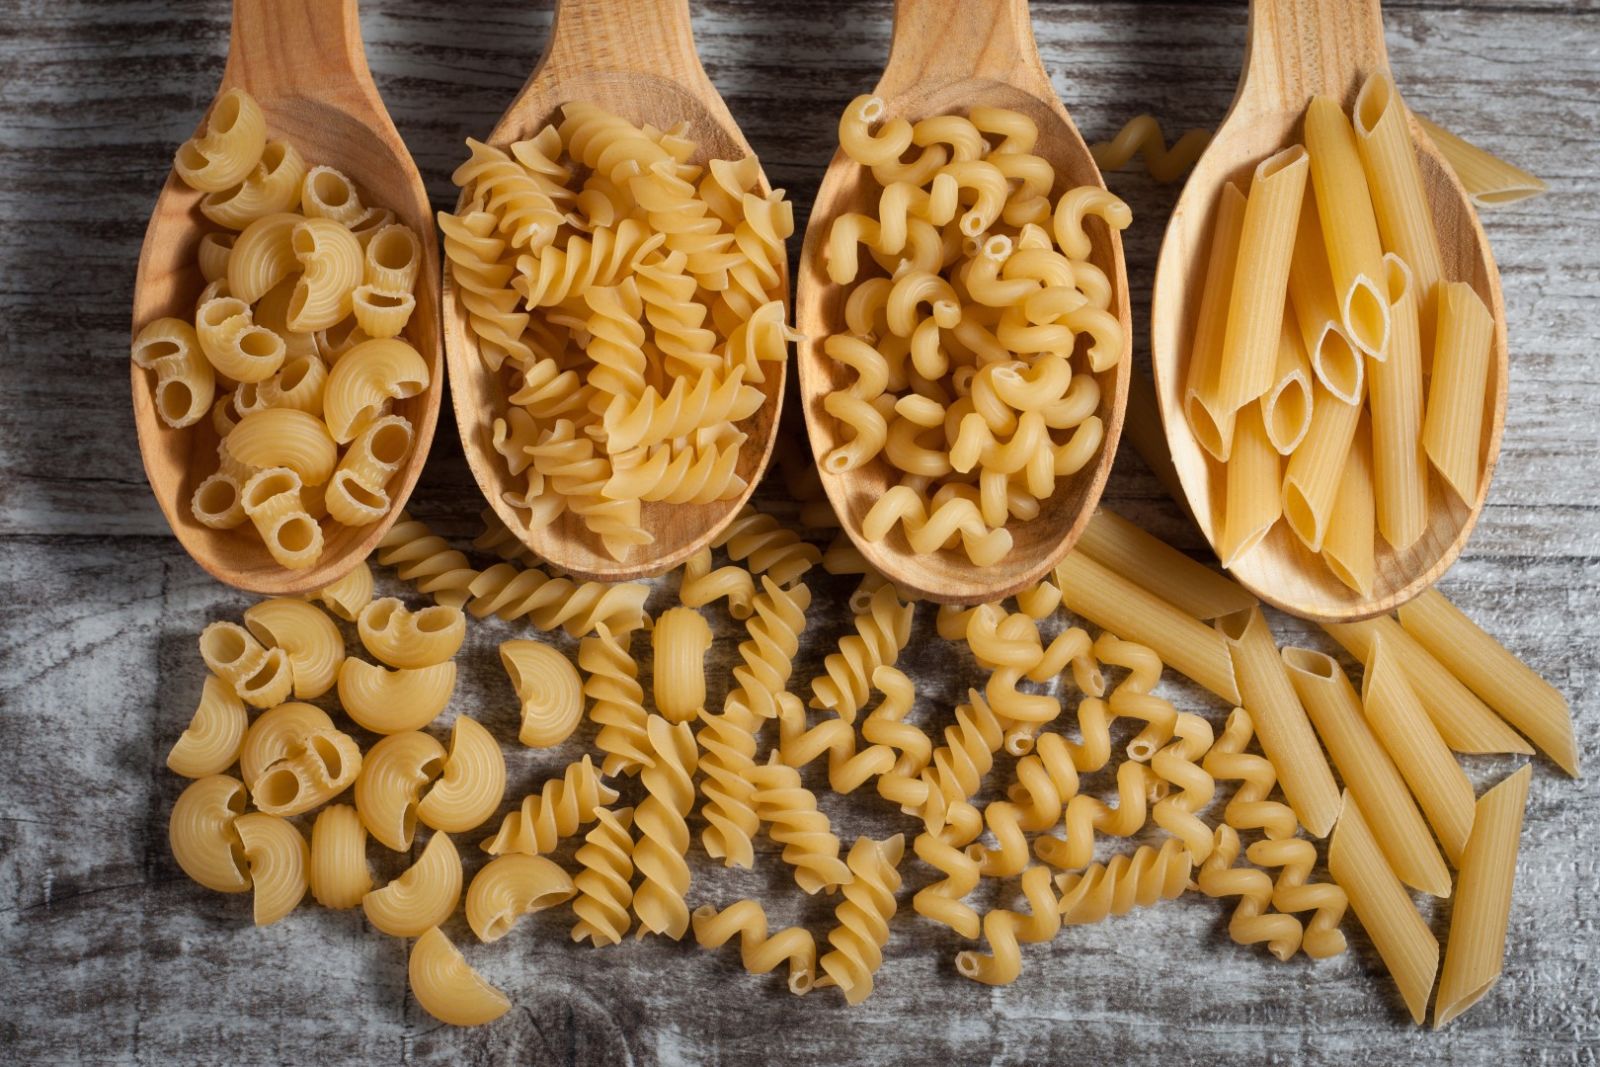 Vemco not raising price on local manufactured pasta